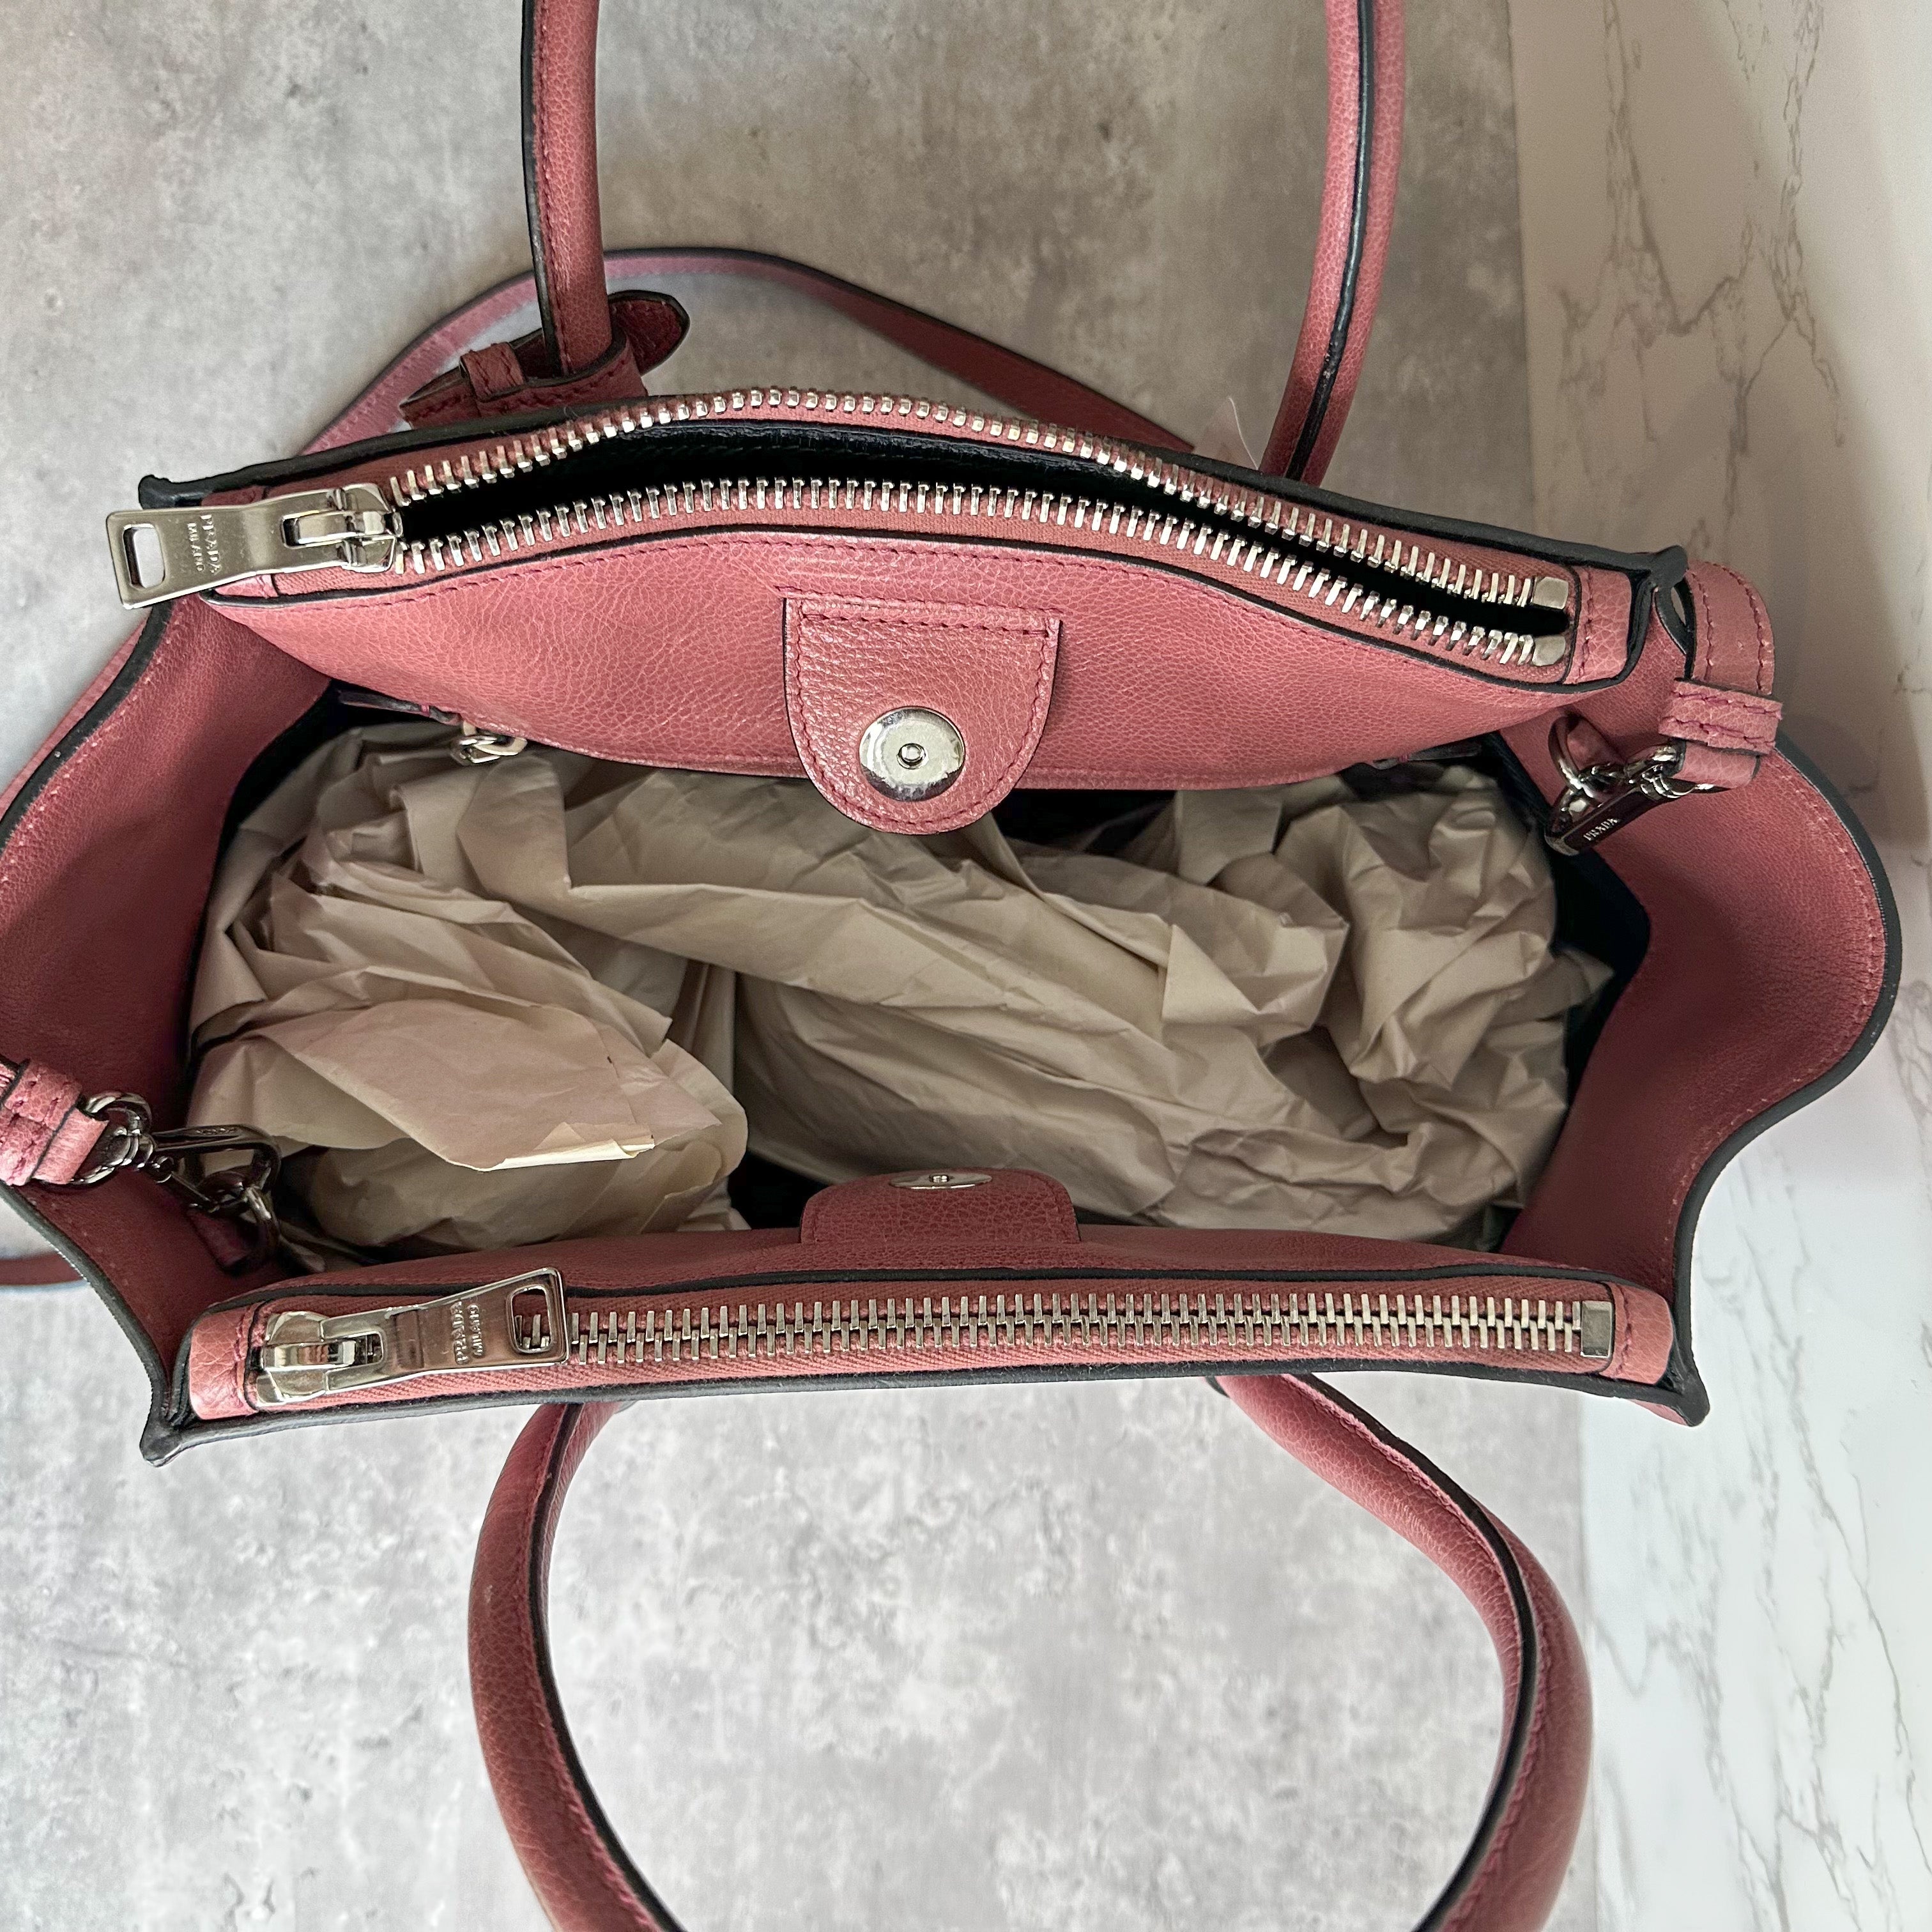 Prada Pink Small Saffiano Galleria Double Zip Leather Pony-style